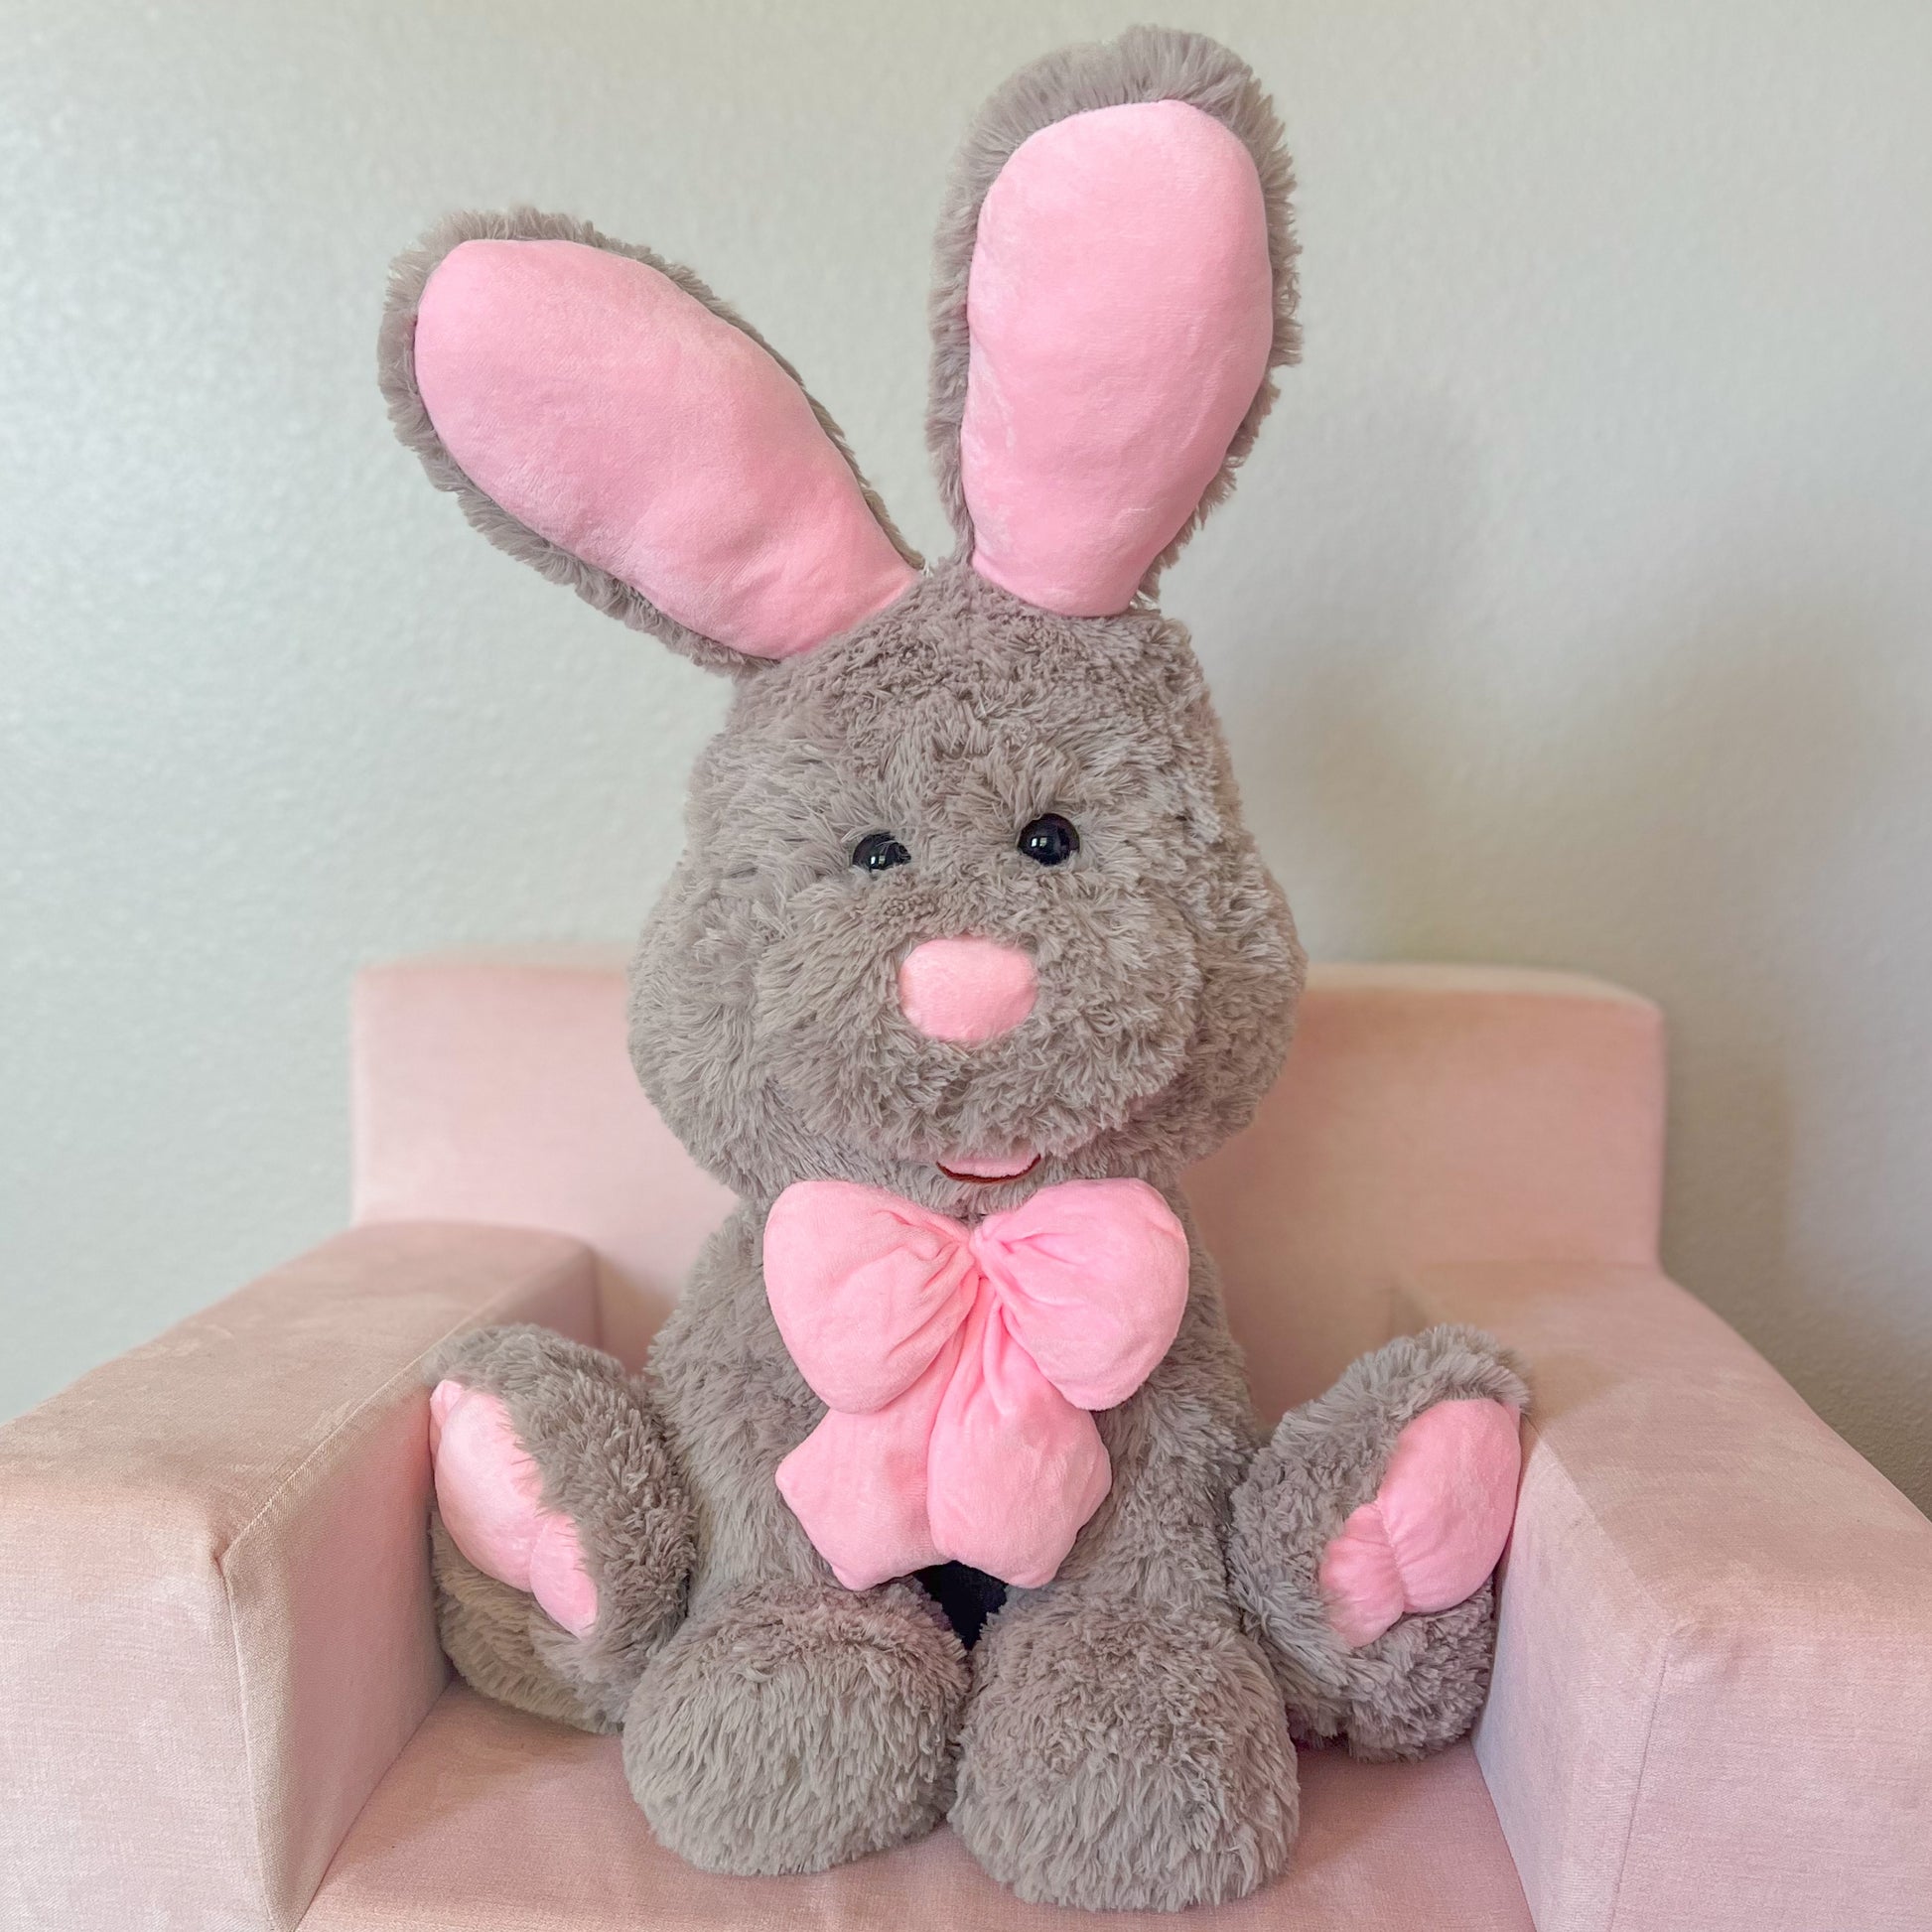 Big Bunny Plush Toy, Grey, 31.4 Inches